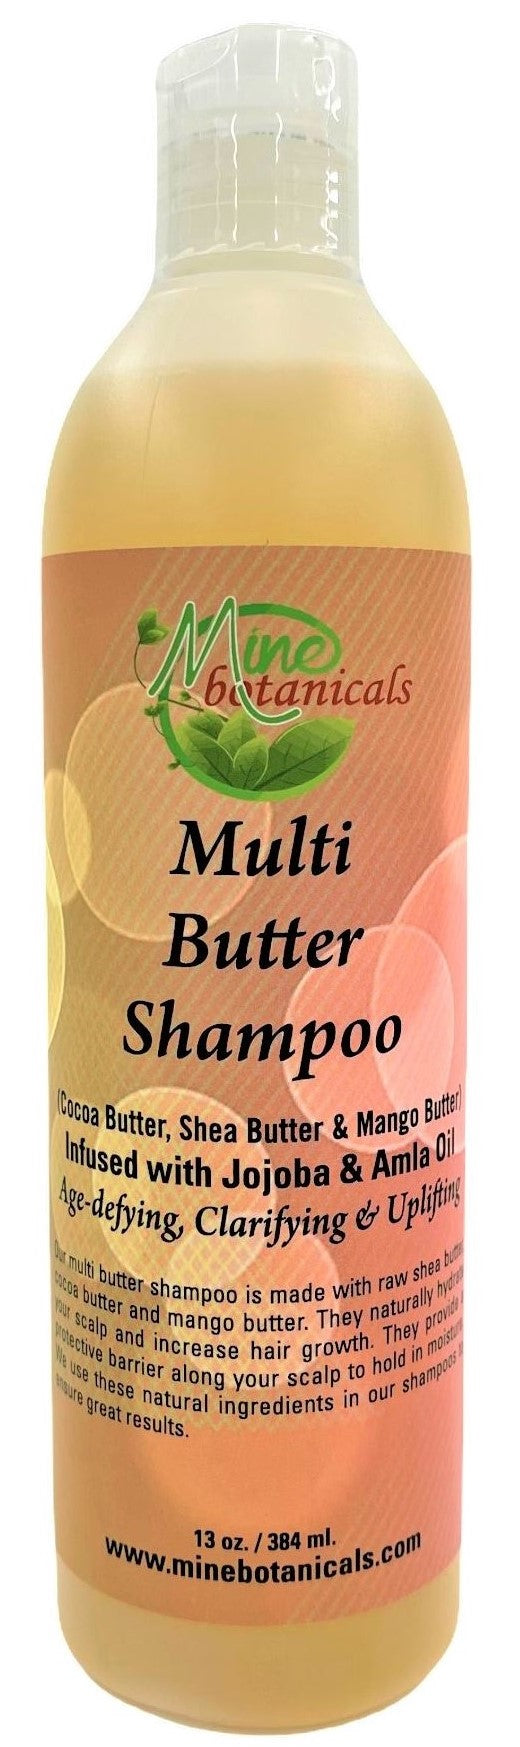 Multi Butter Shampoo